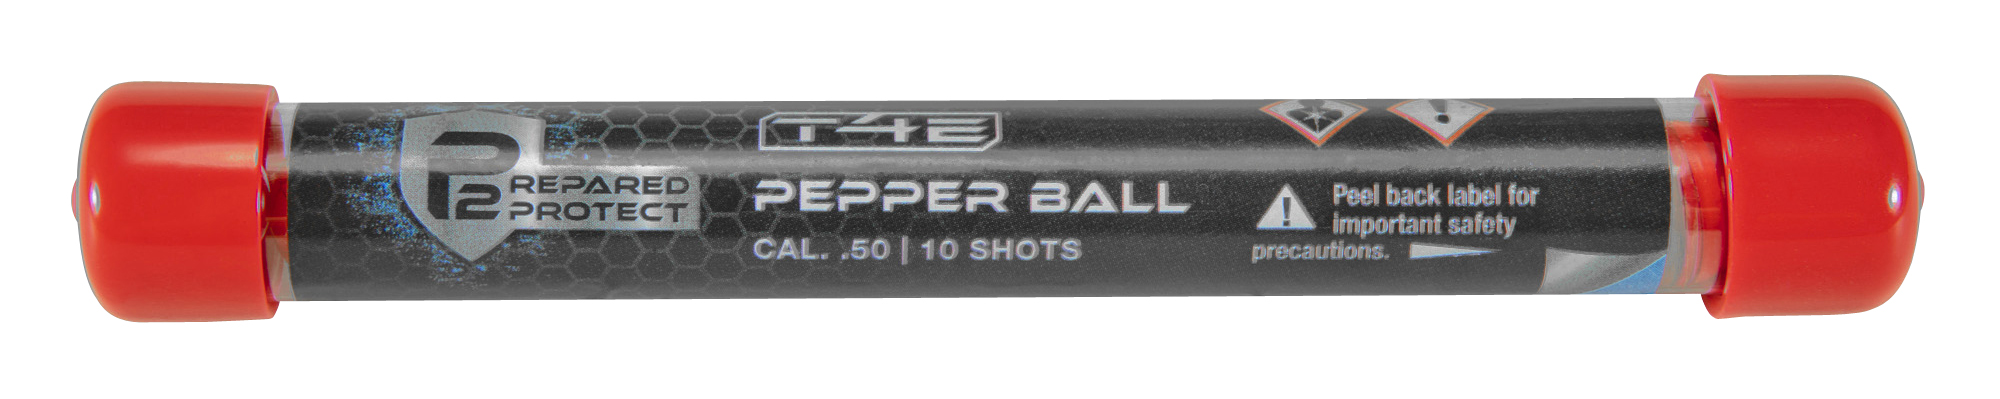 UMAREX T4E P2P .50 CAL. PEPPER BALL RED/WHITE 10-PACK